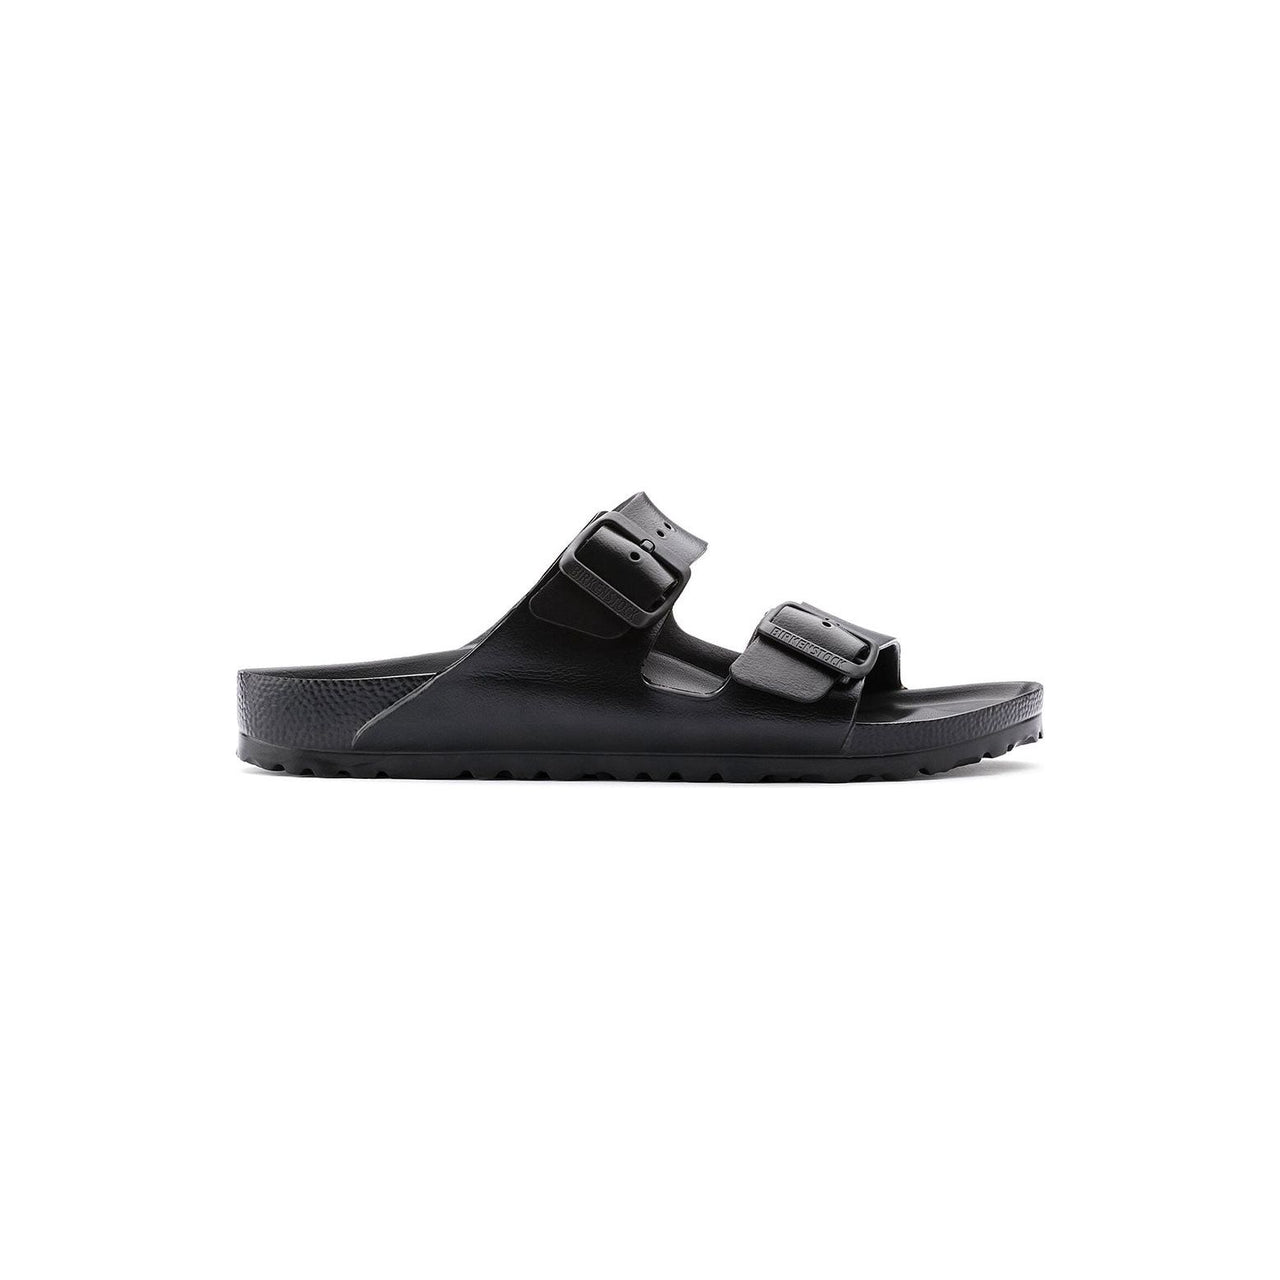 Black Birkenstock Arizona Eva Sandals with adjustable straps and contoured footbed